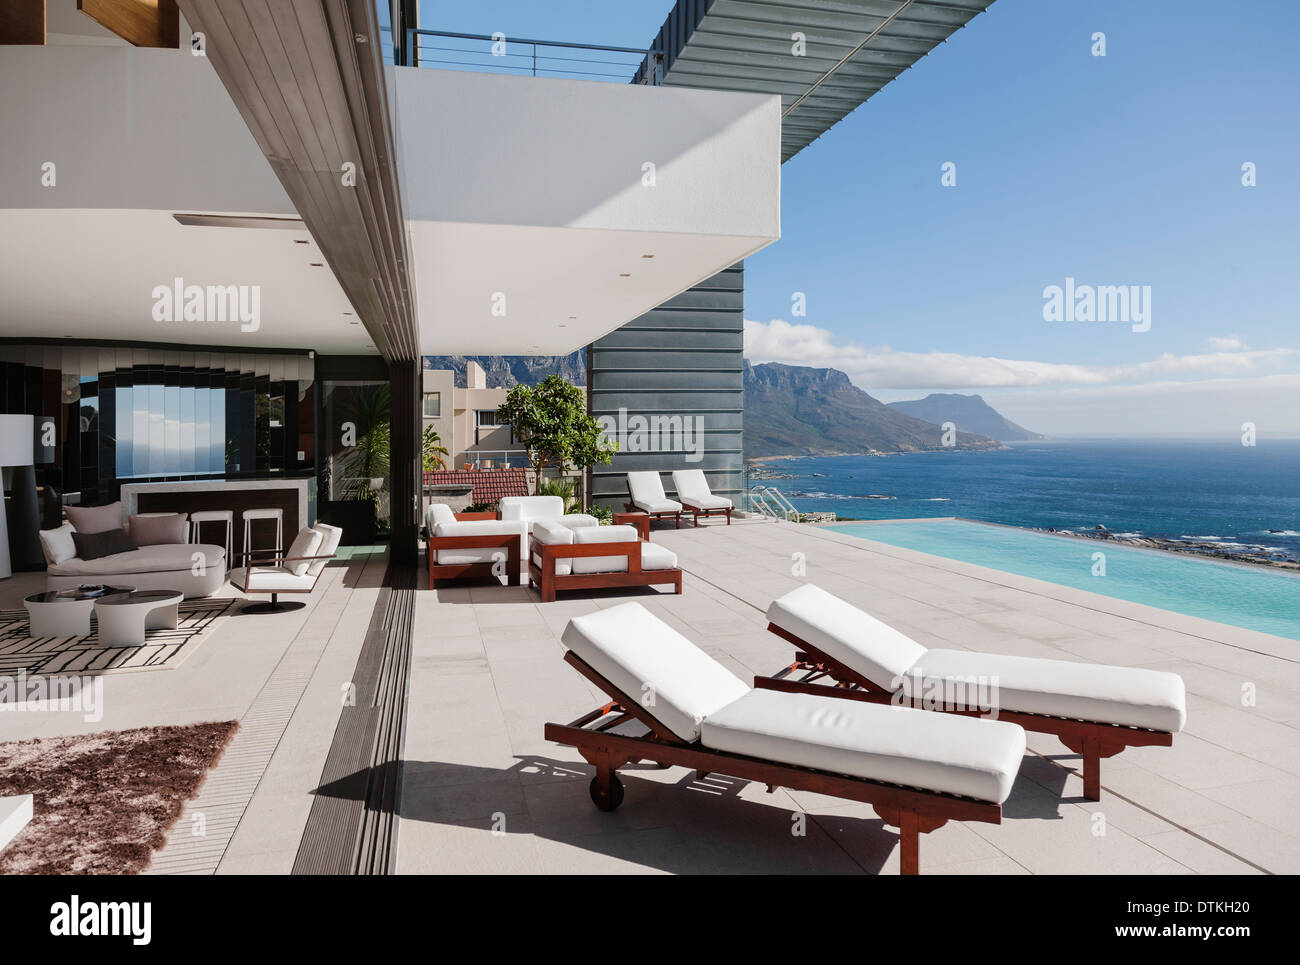 Modern patio and infinity pool overlooking ocean Stock Photo